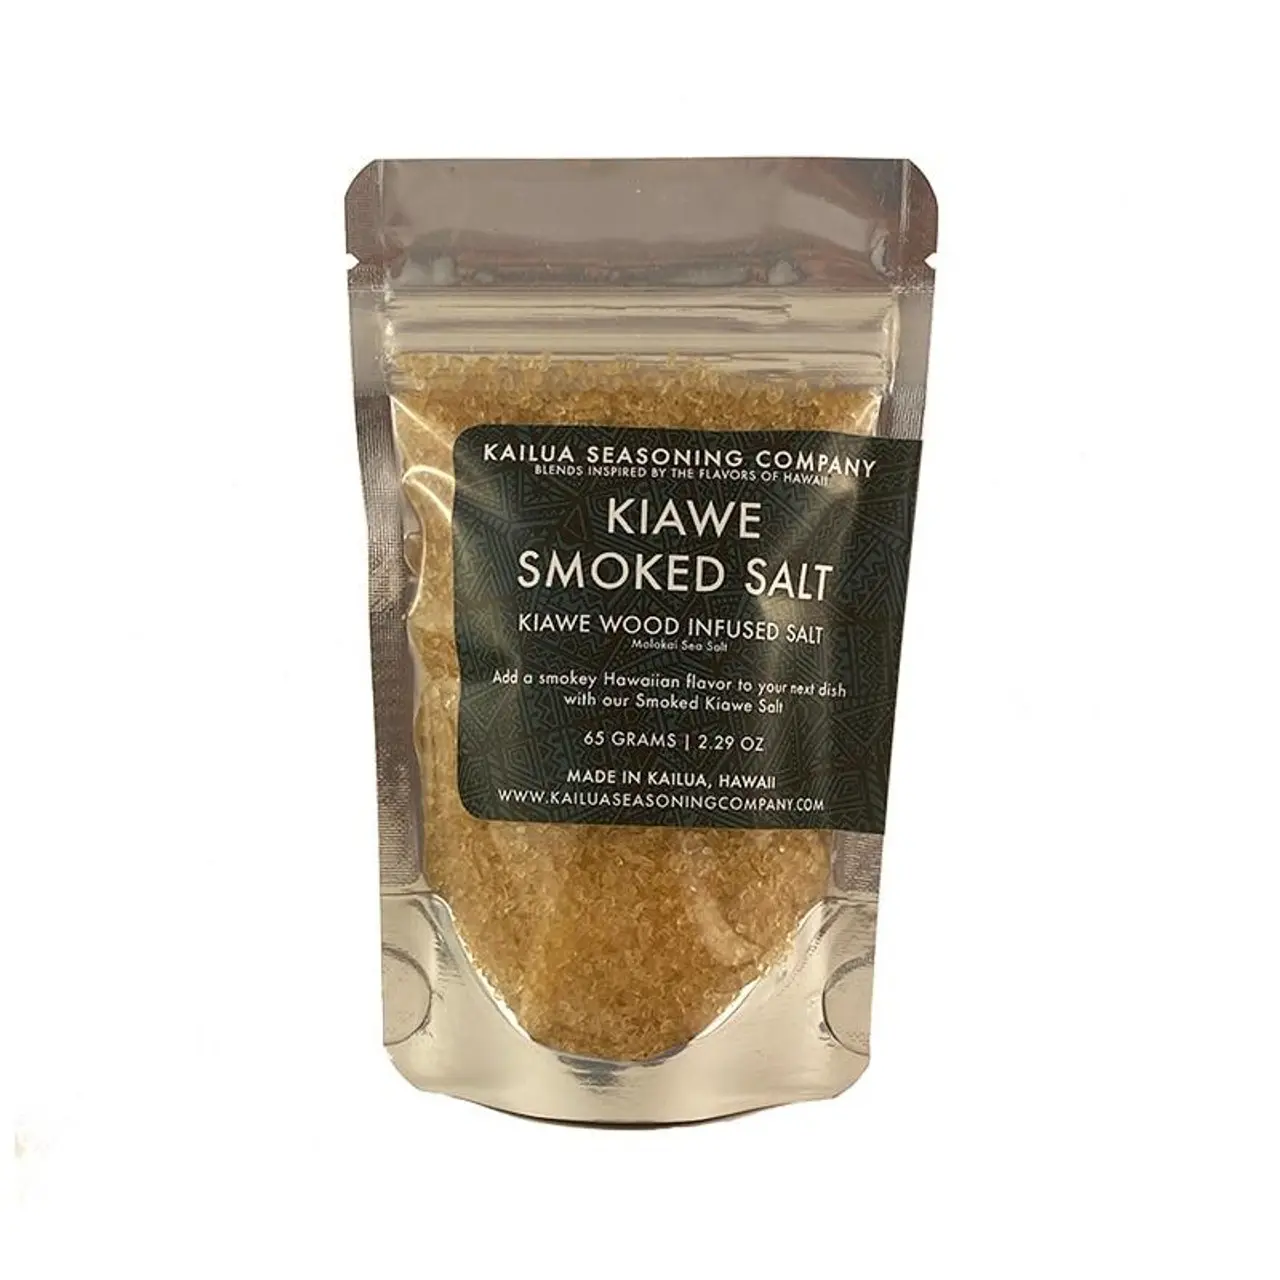 hawaiian smoked salt - What's the difference between Hawaiian salt and regular salt